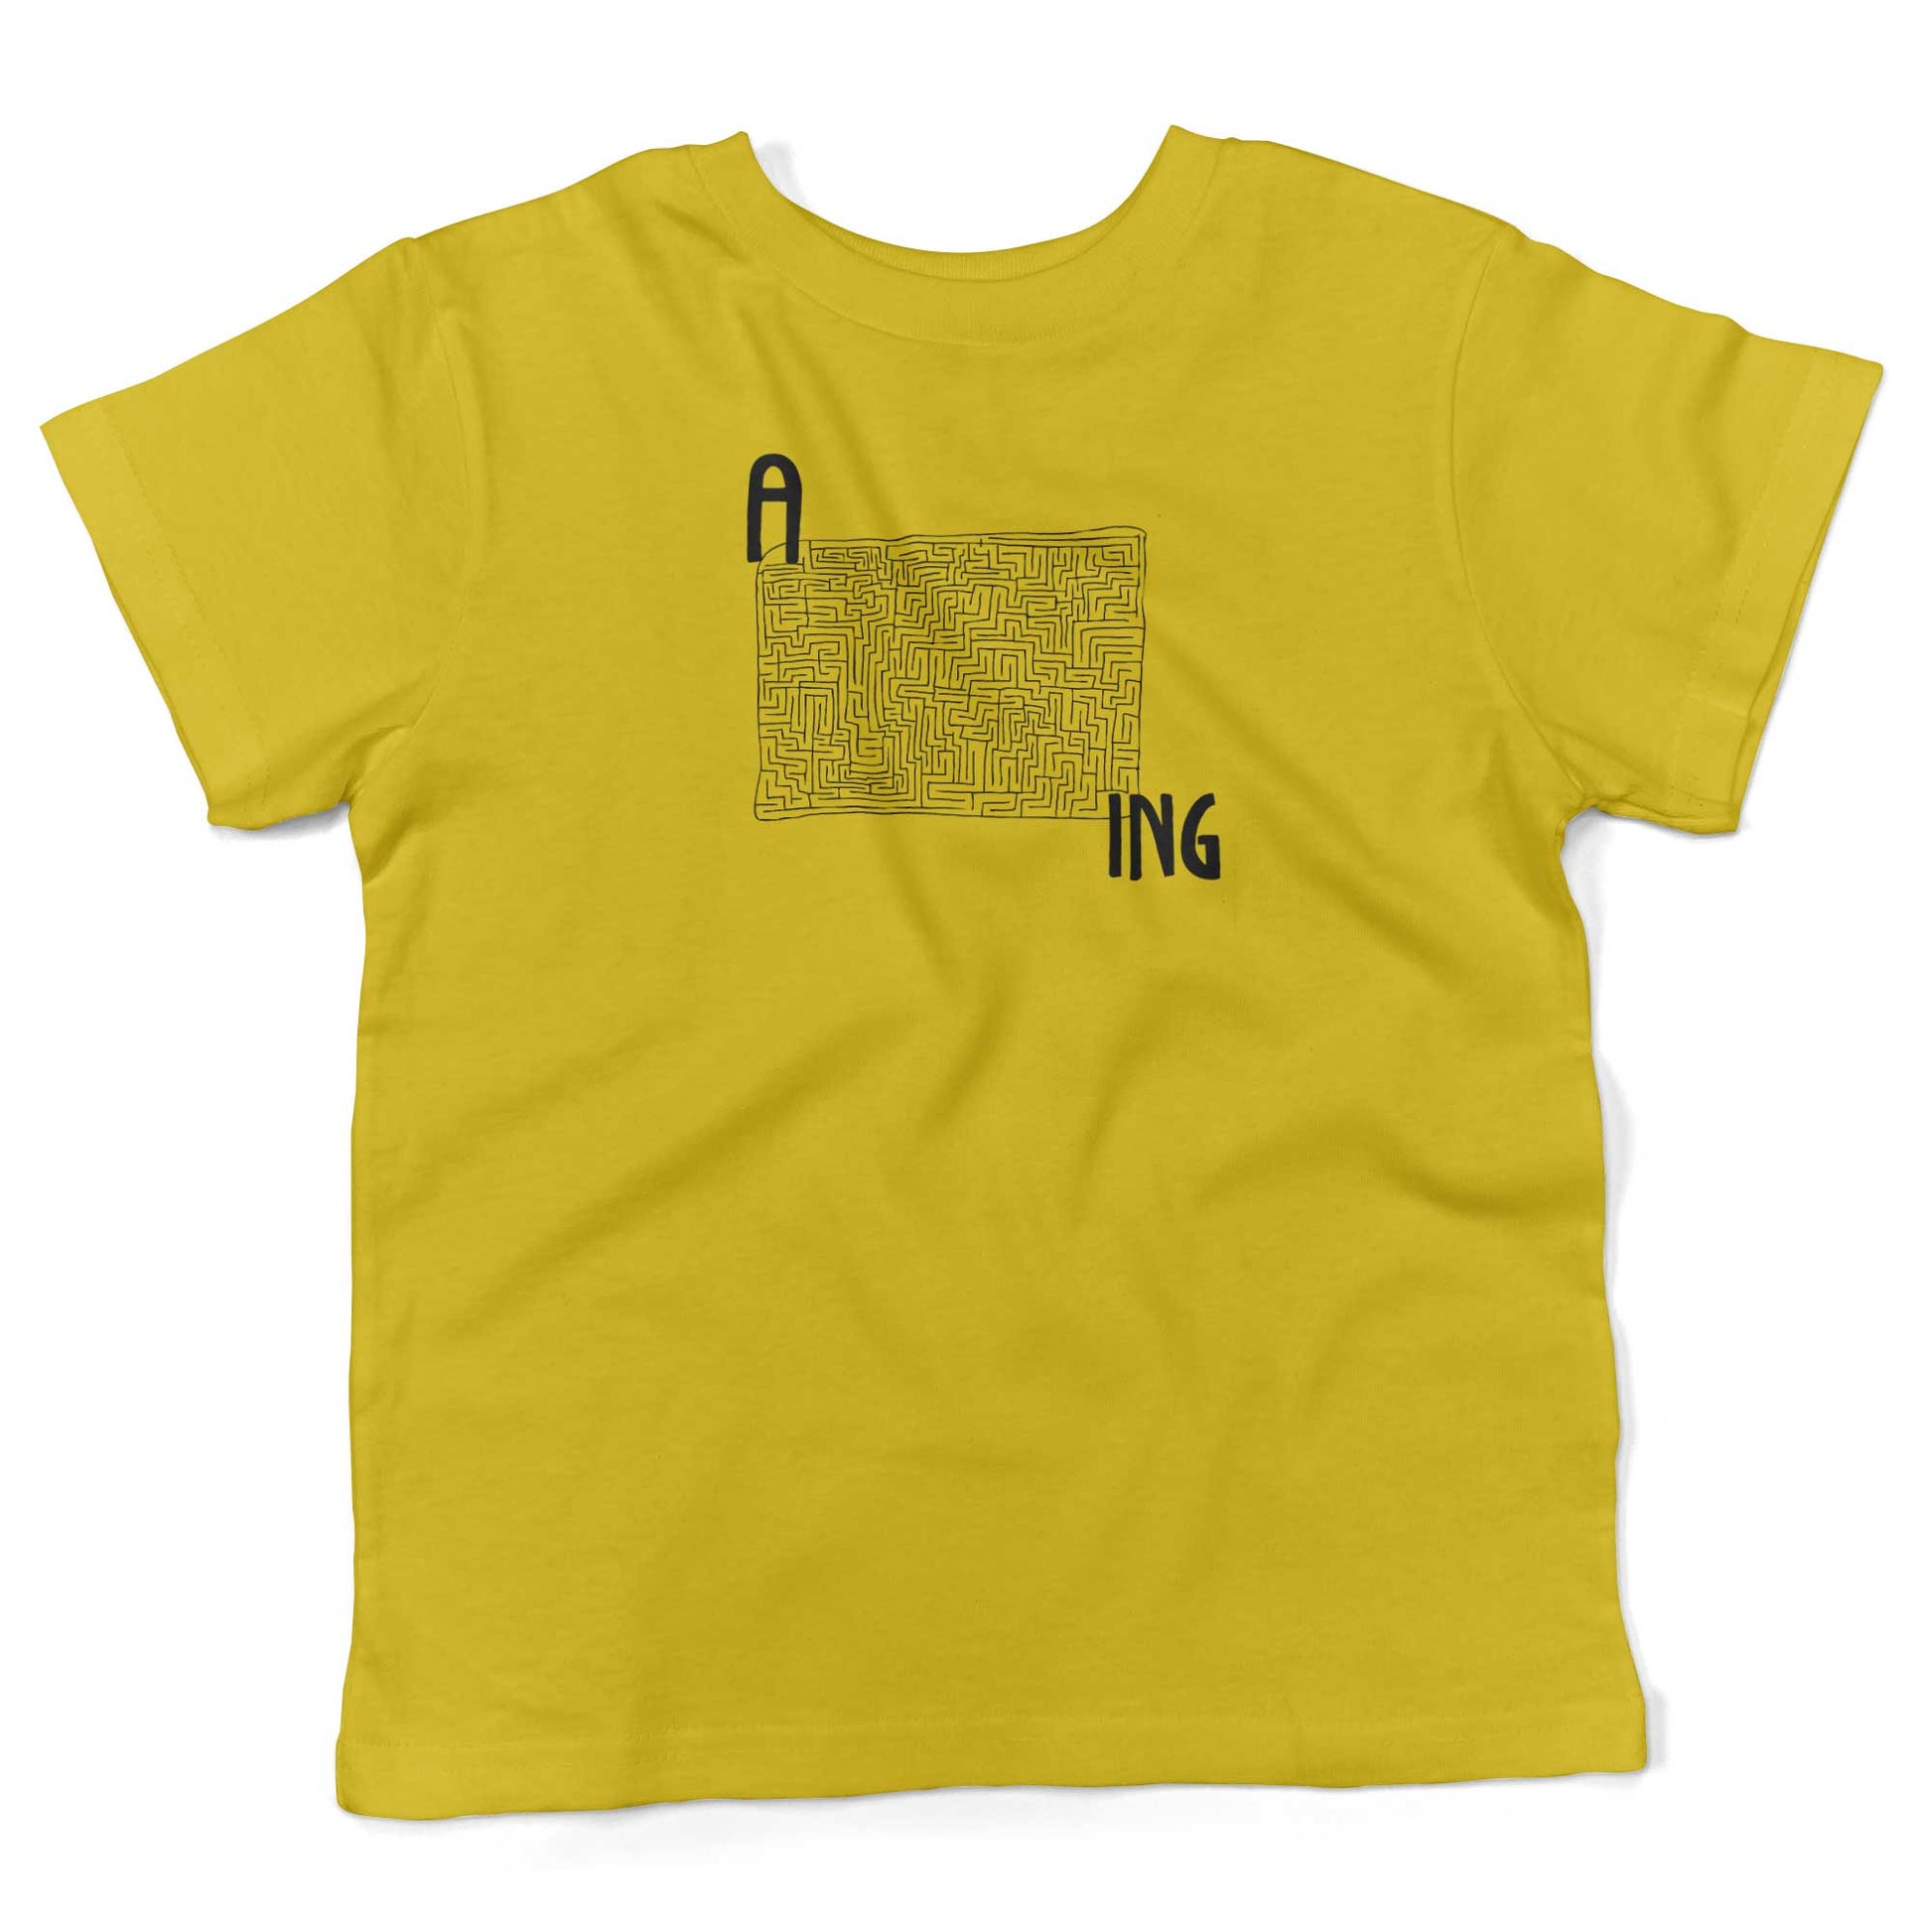 Amazing Toddler Shirt-Sunshine Yellow-2T